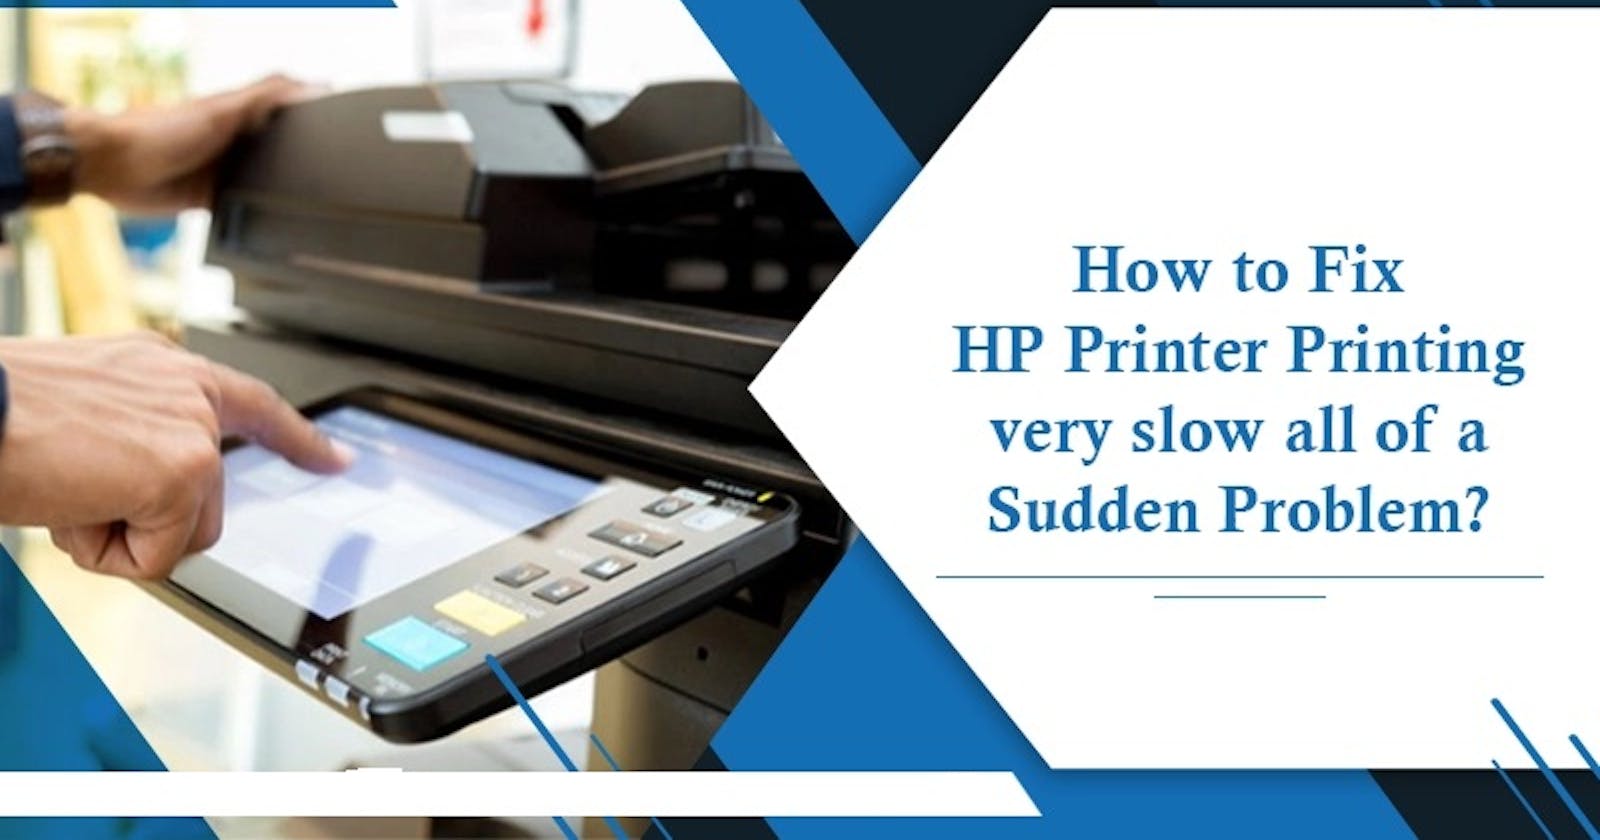 How to Resolve HP Printer Printing Very Slowly?